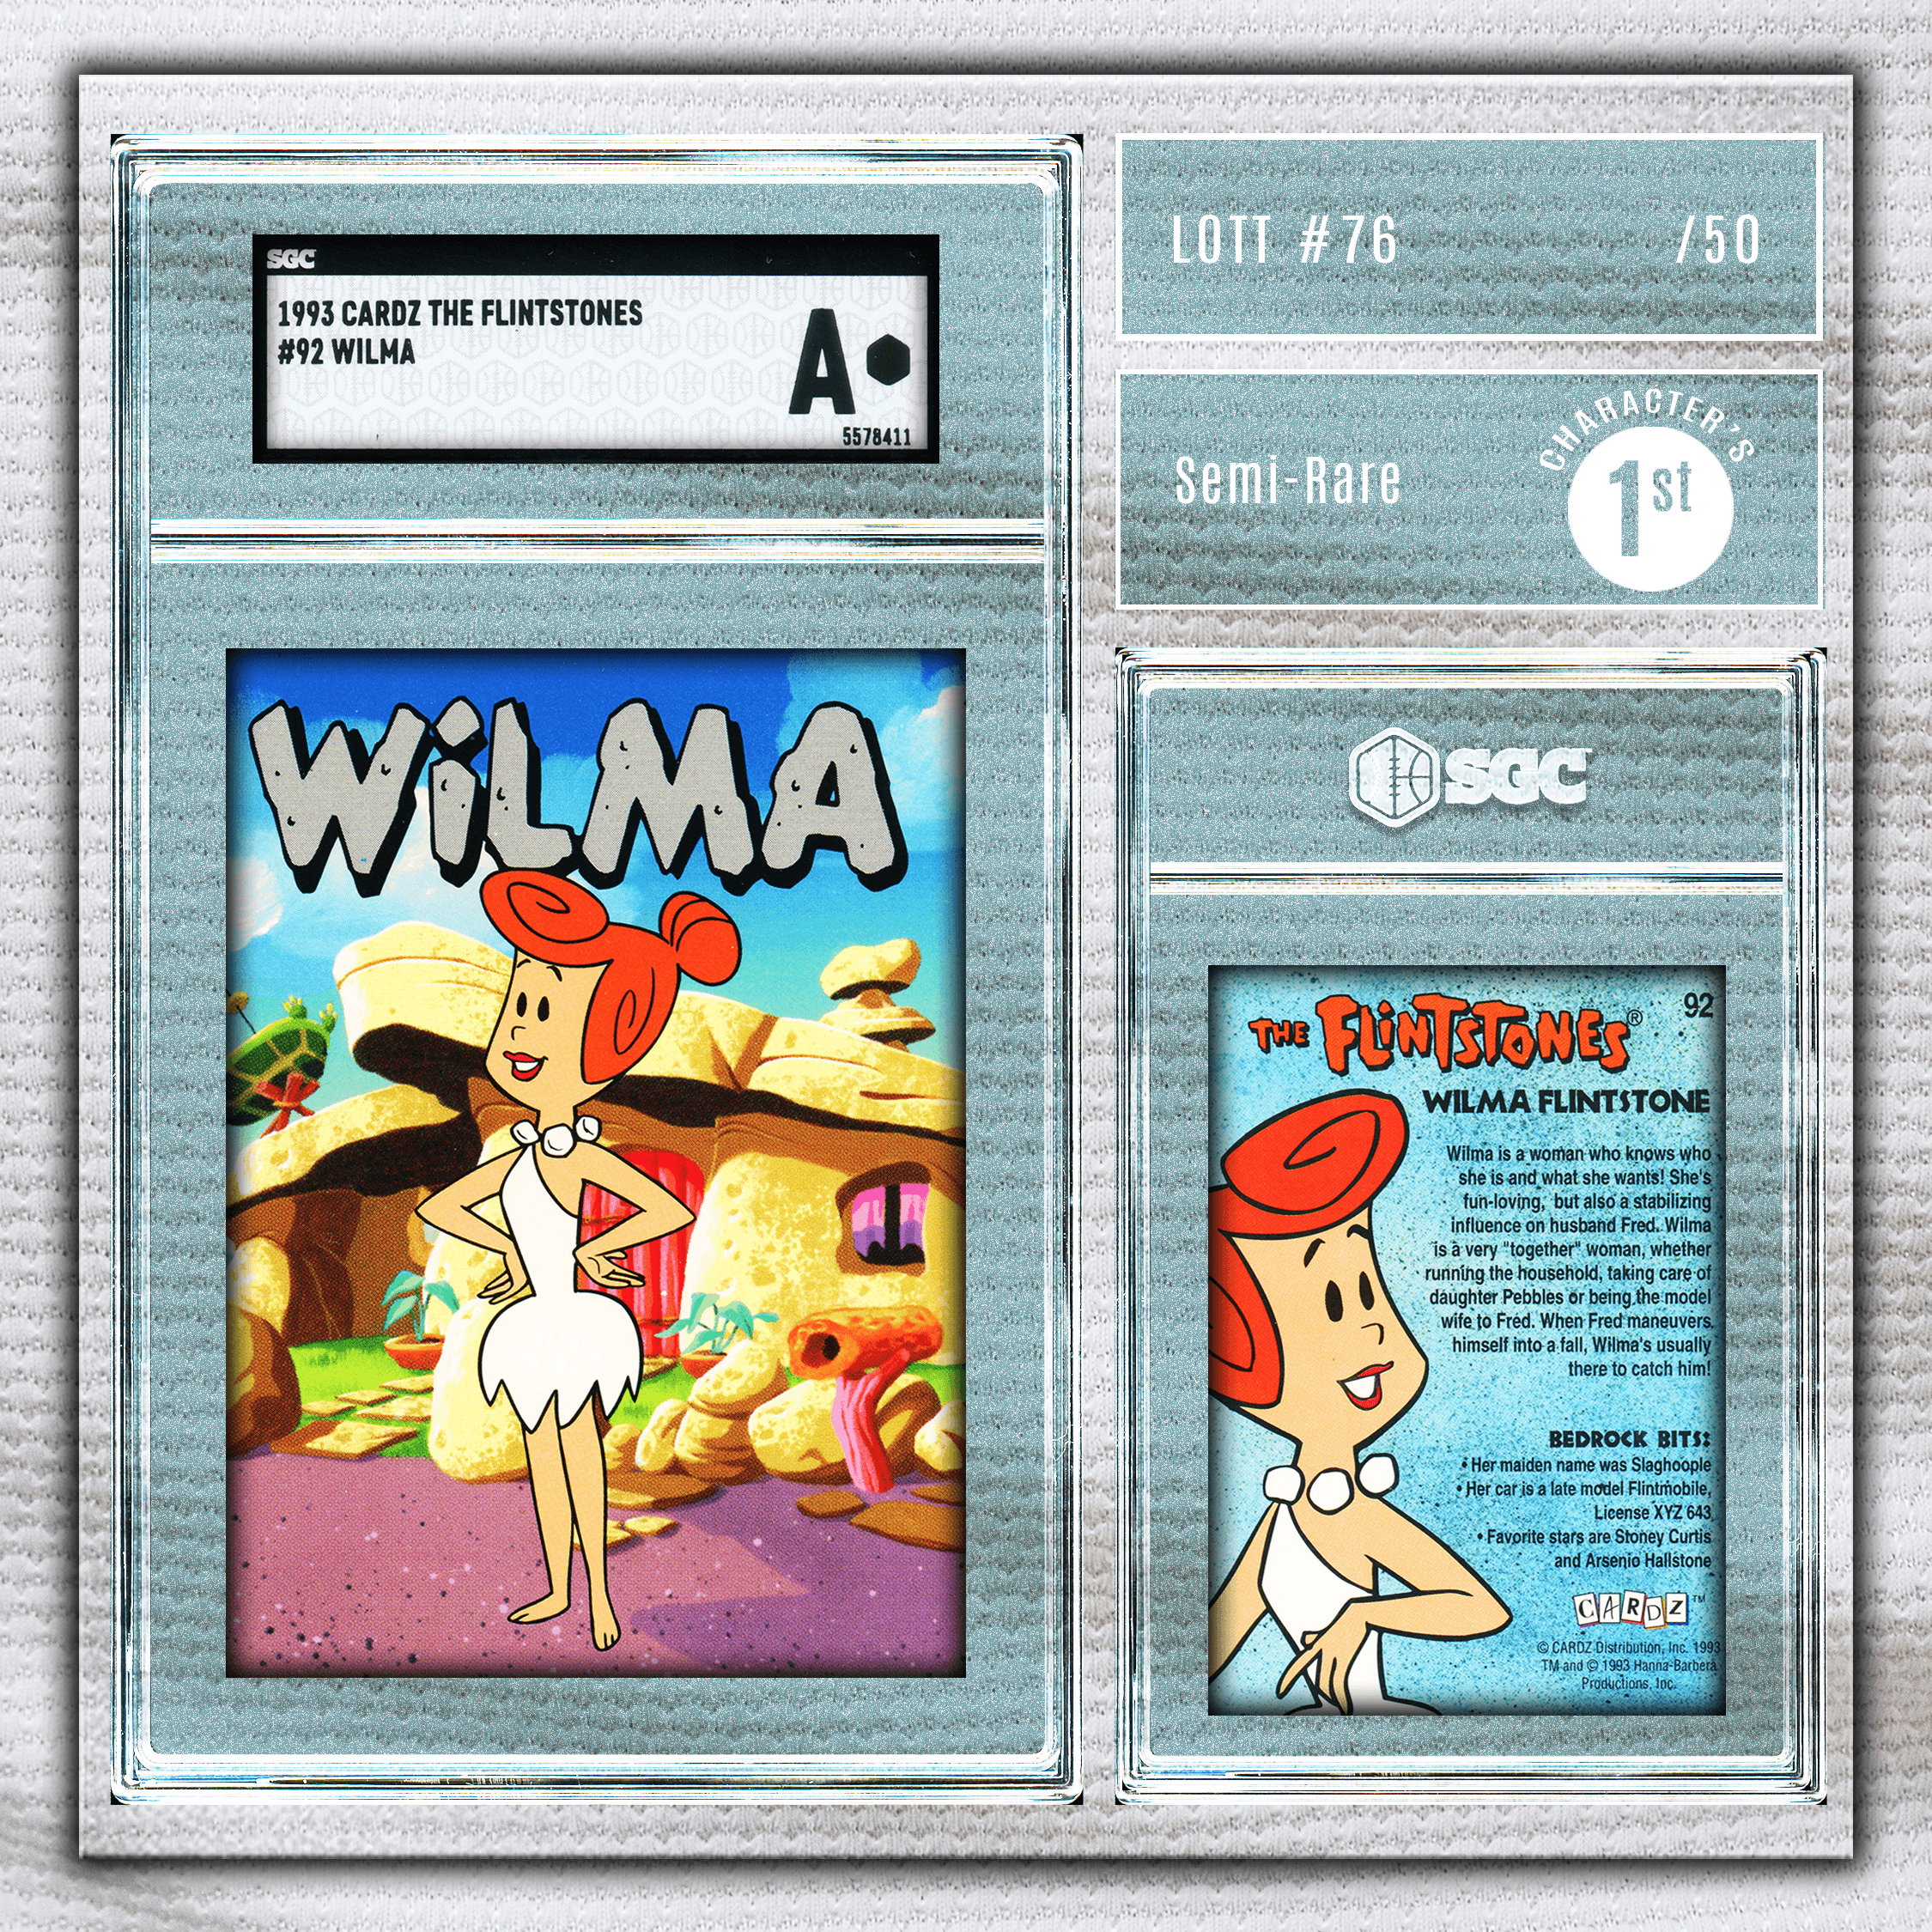 Wilma Flintstone - (1993 Cardz - The Flintstones SGC A)